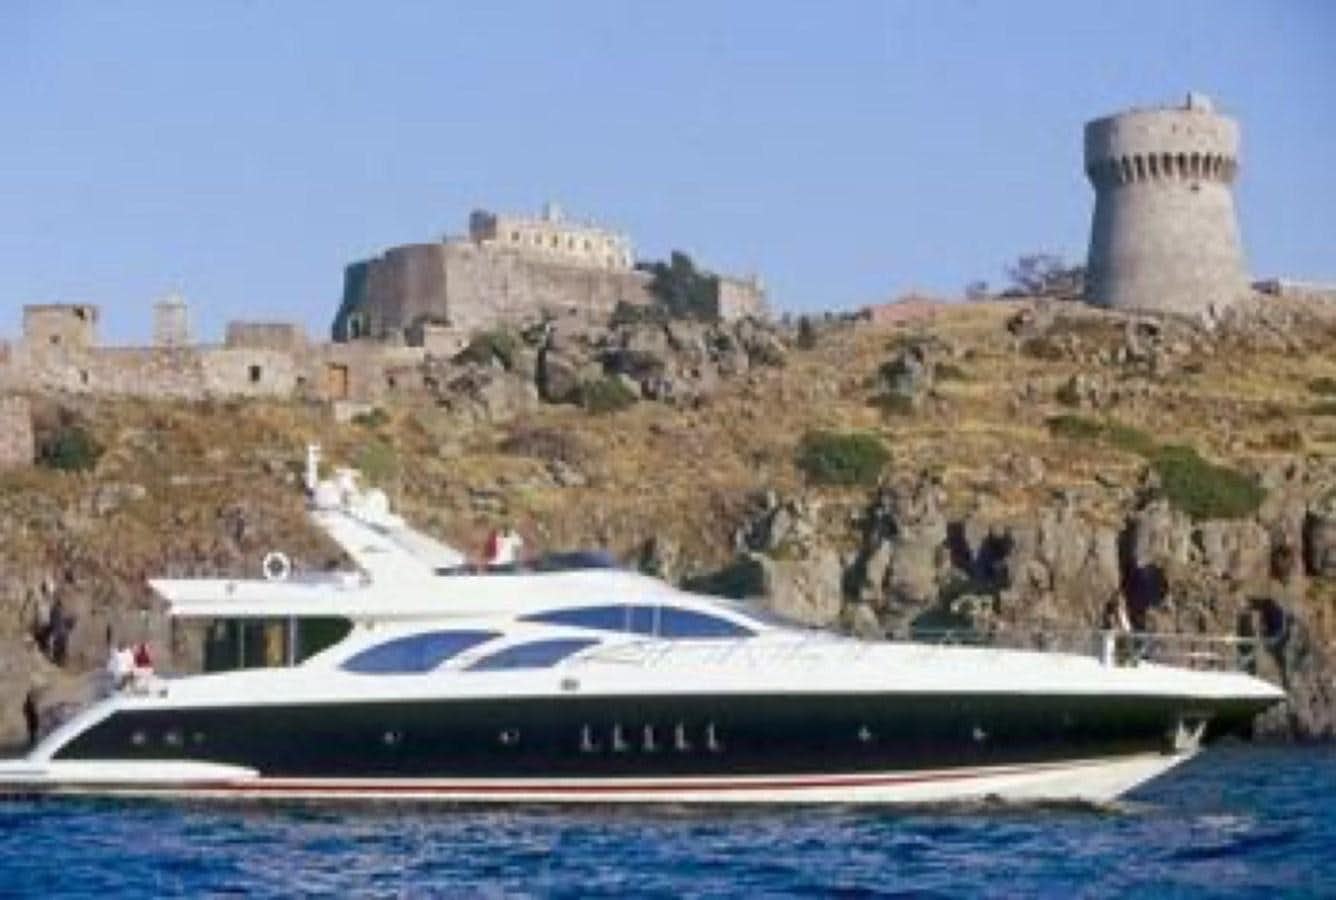 2004 azimut 98 leonardo
Yacht for Sale